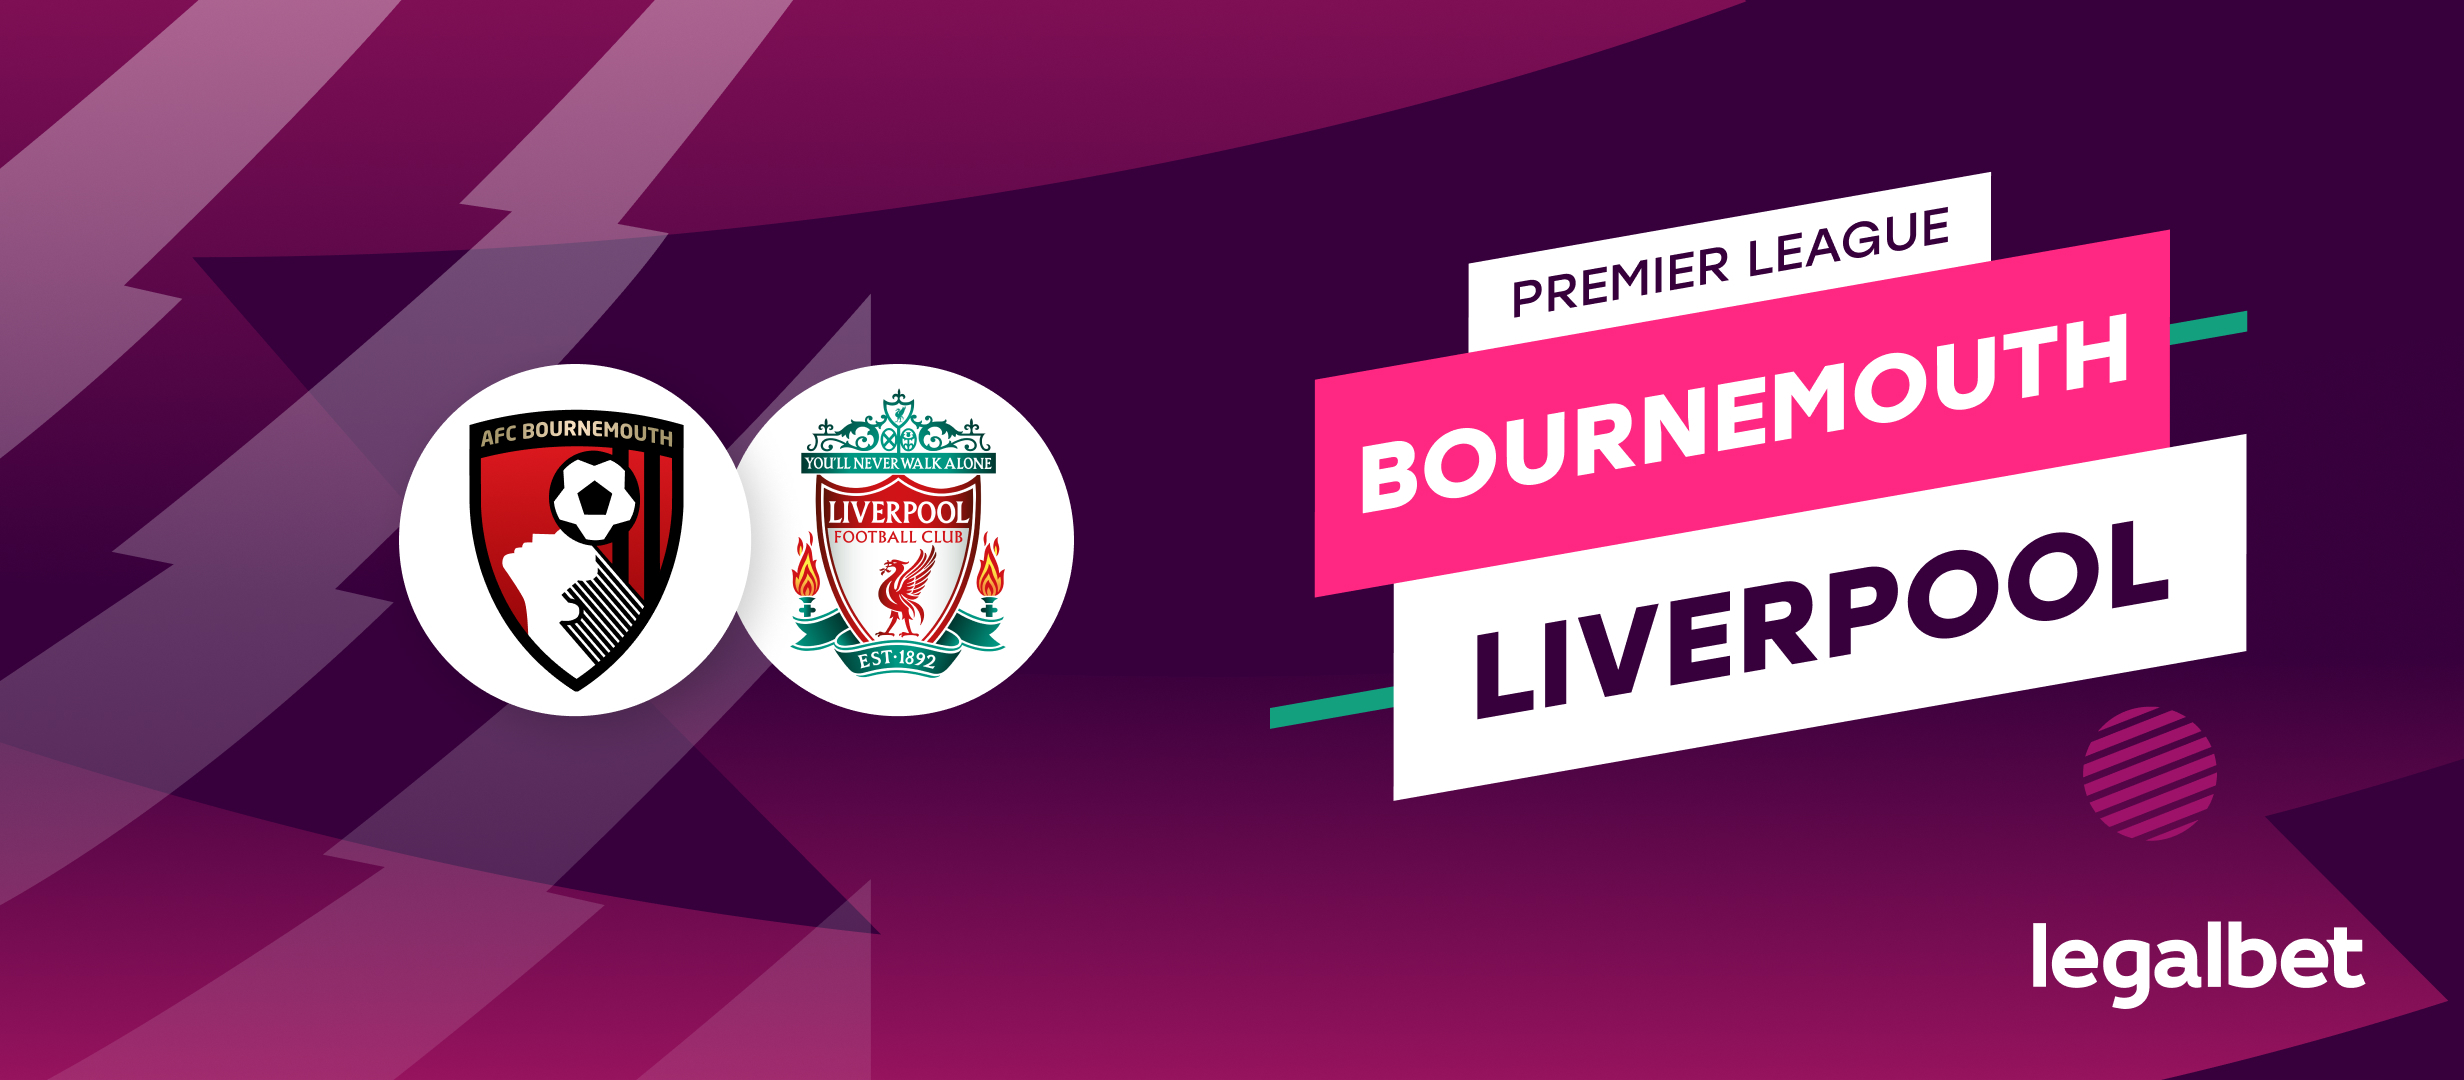 Bournemouth - Liverpool, ponturi la pariuri Premier League